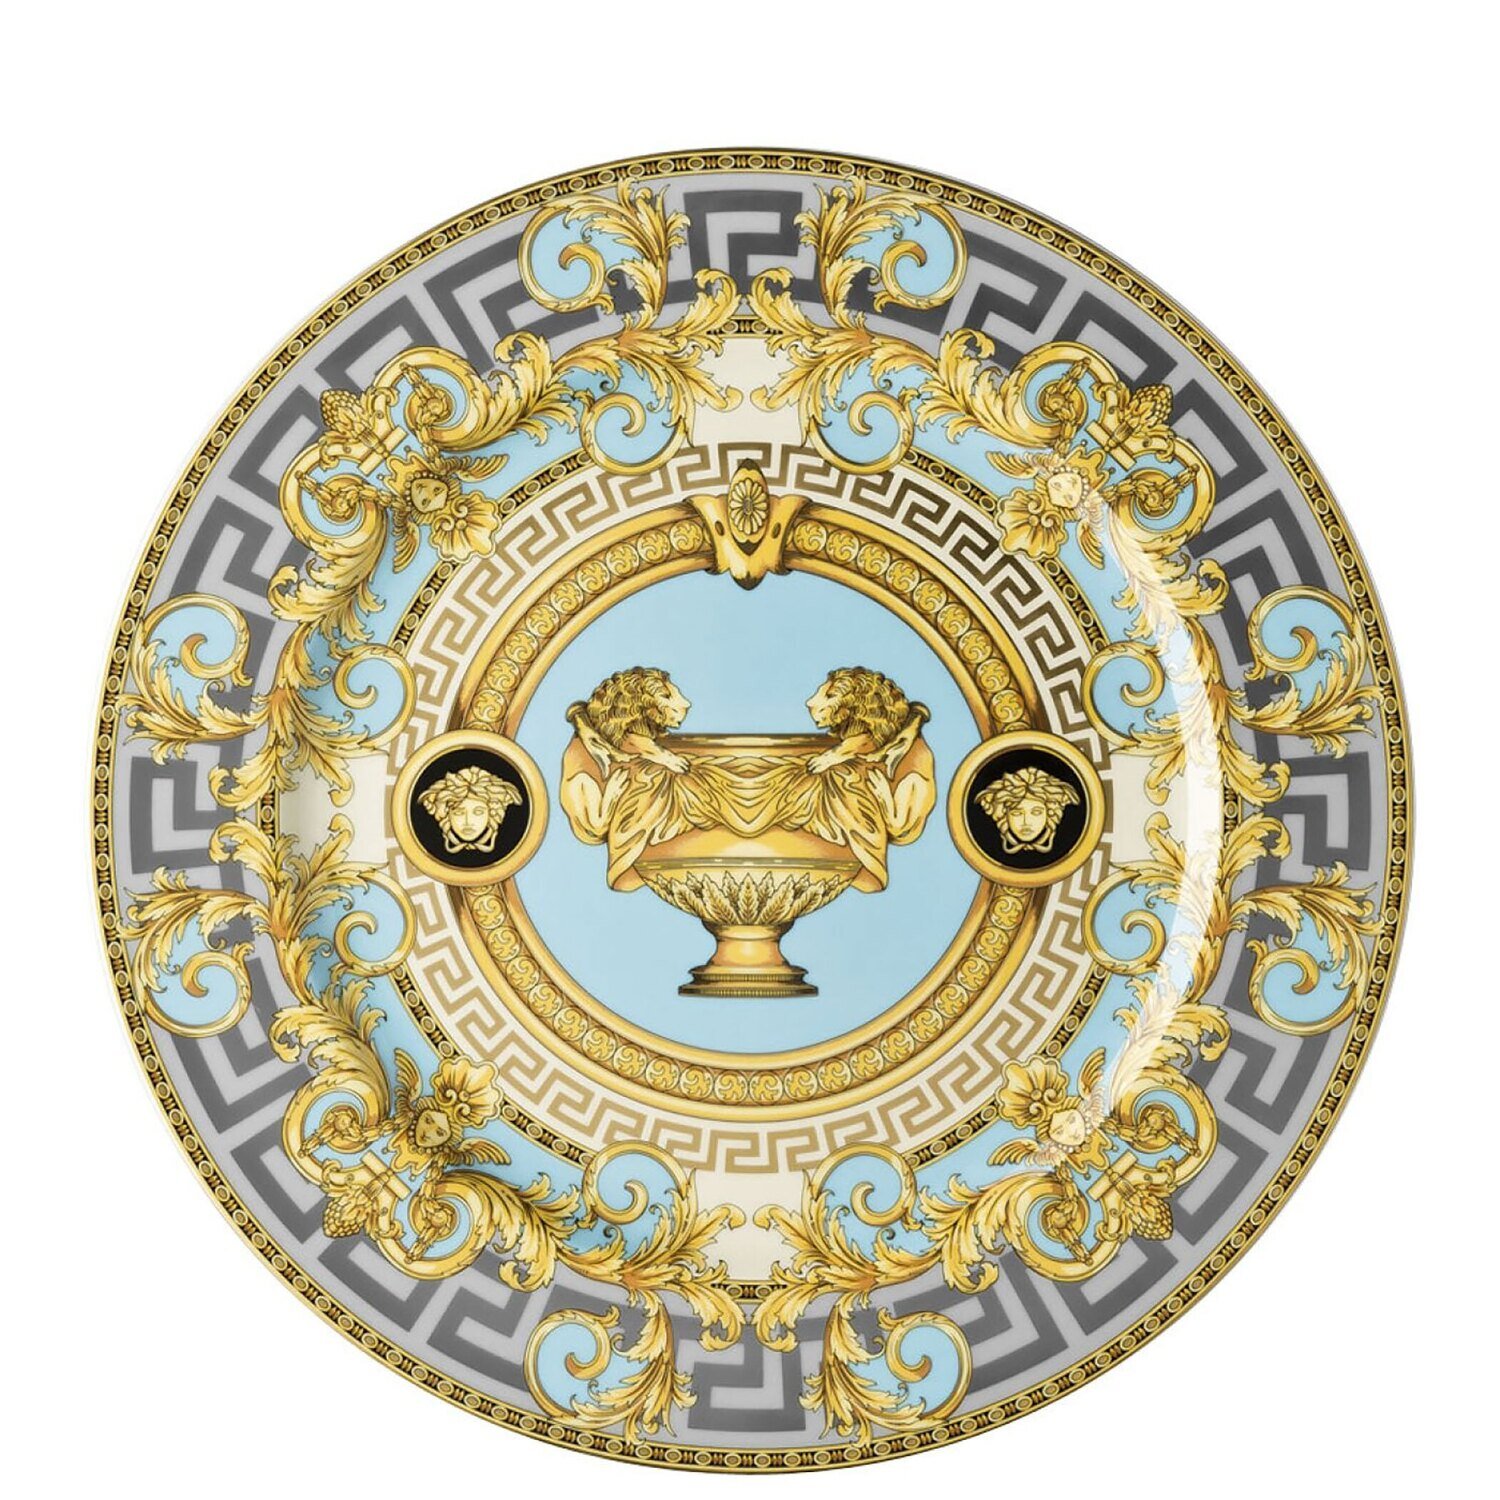 Versace Prestige Gala Bleu 2 Service Plate (less gold) 11 3/4 Inch